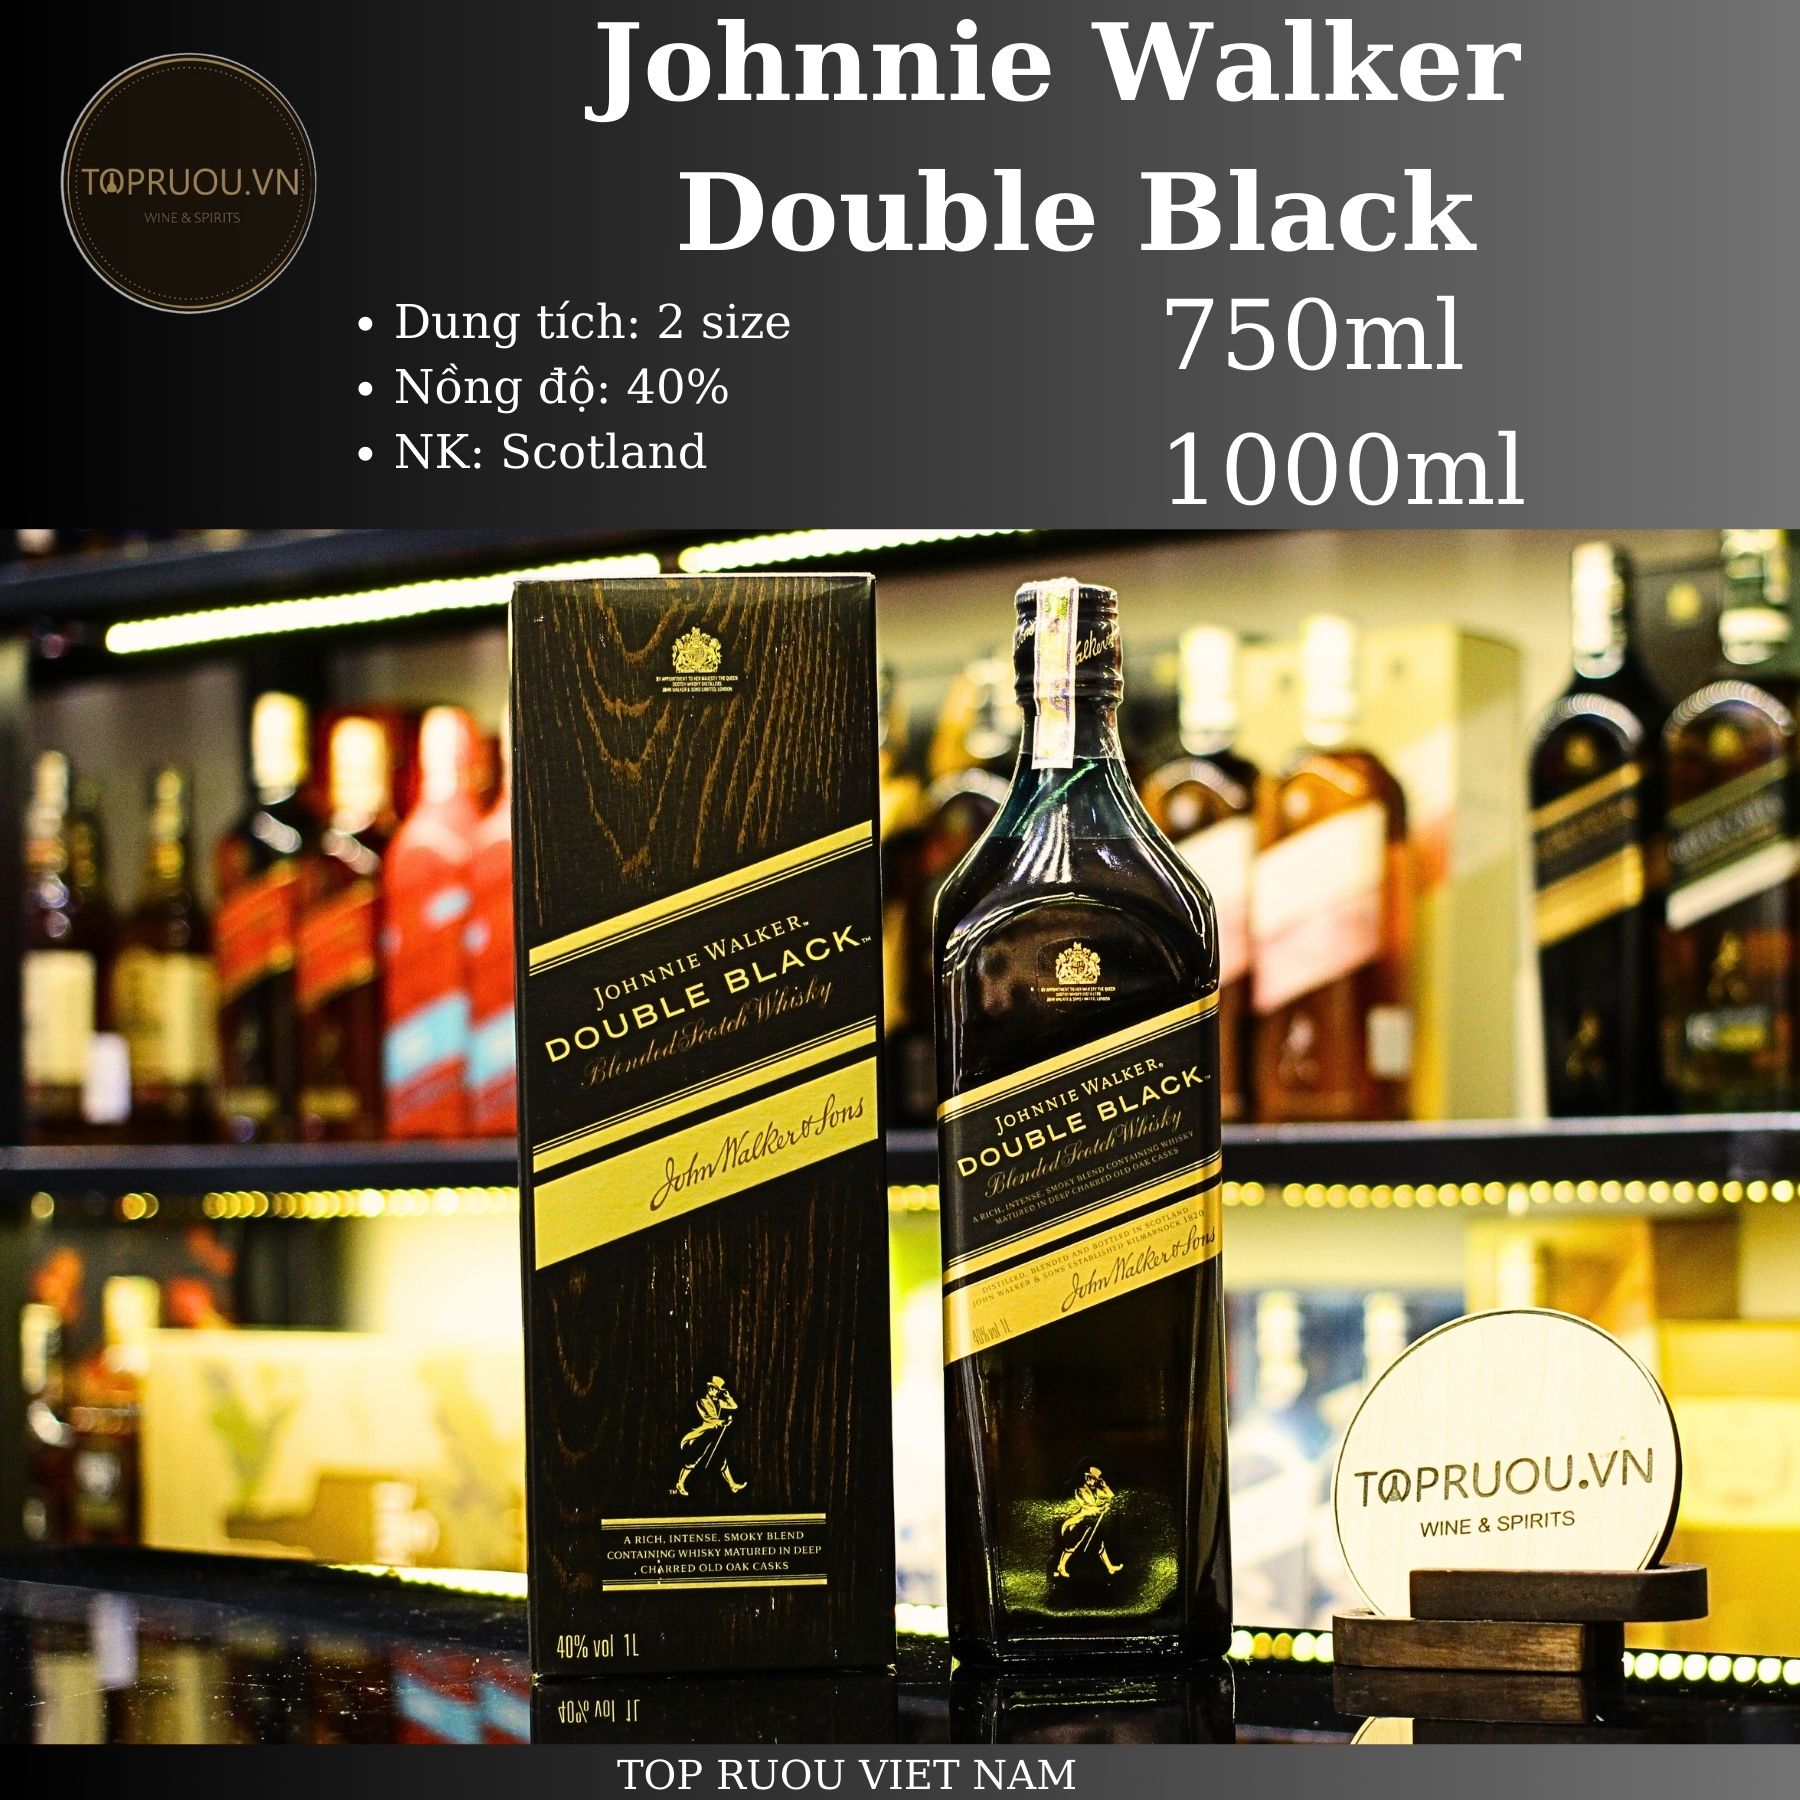 [TopRuouVietNam] Rượu Whisky Johnnie Walker Black Label - Double Black - Gold - Blue - XR 19 - XR 21 700ml - 1000ml [Hàng Thật]